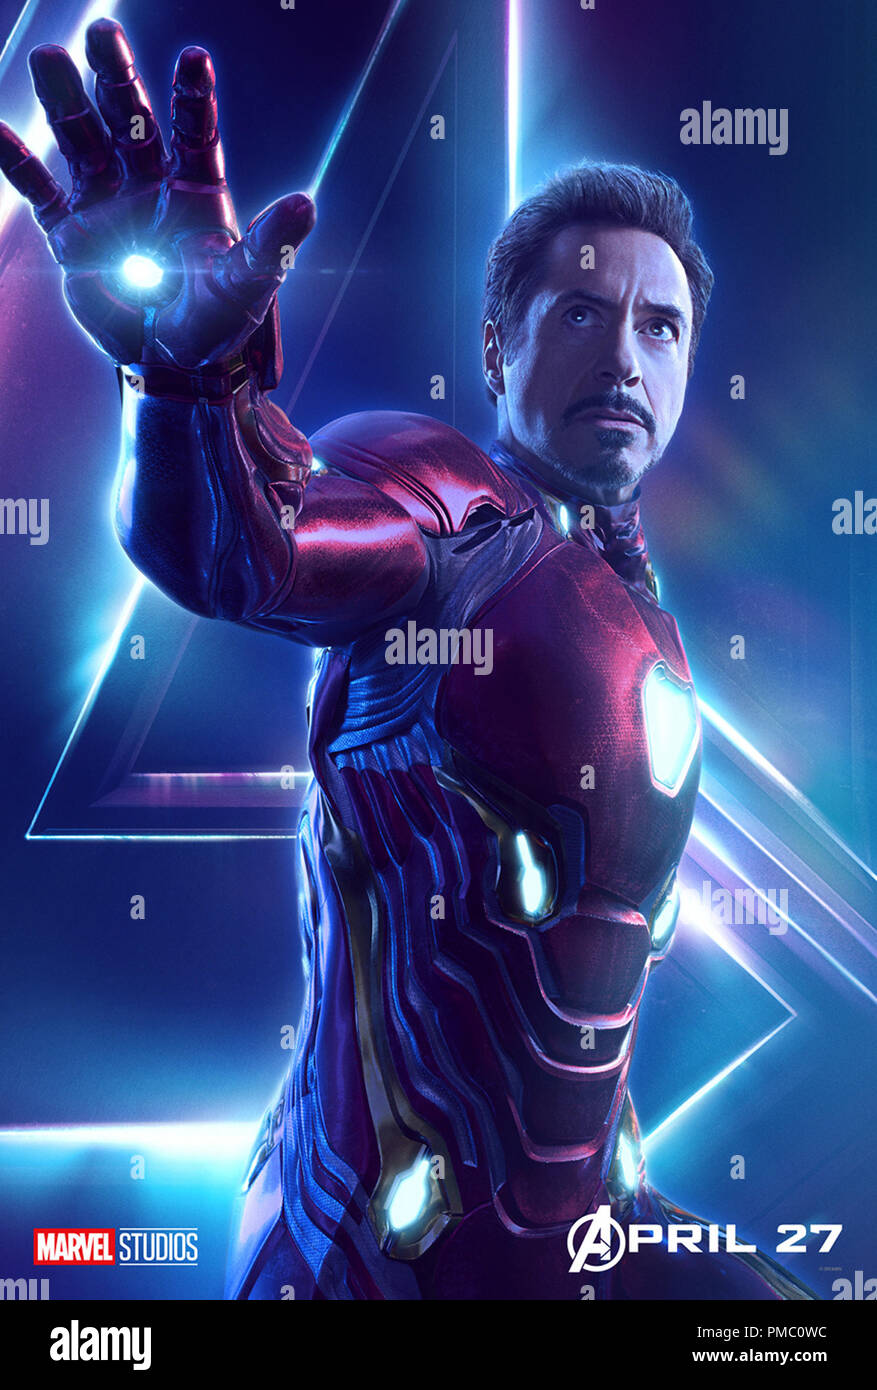 Avengers infinity war poster hi